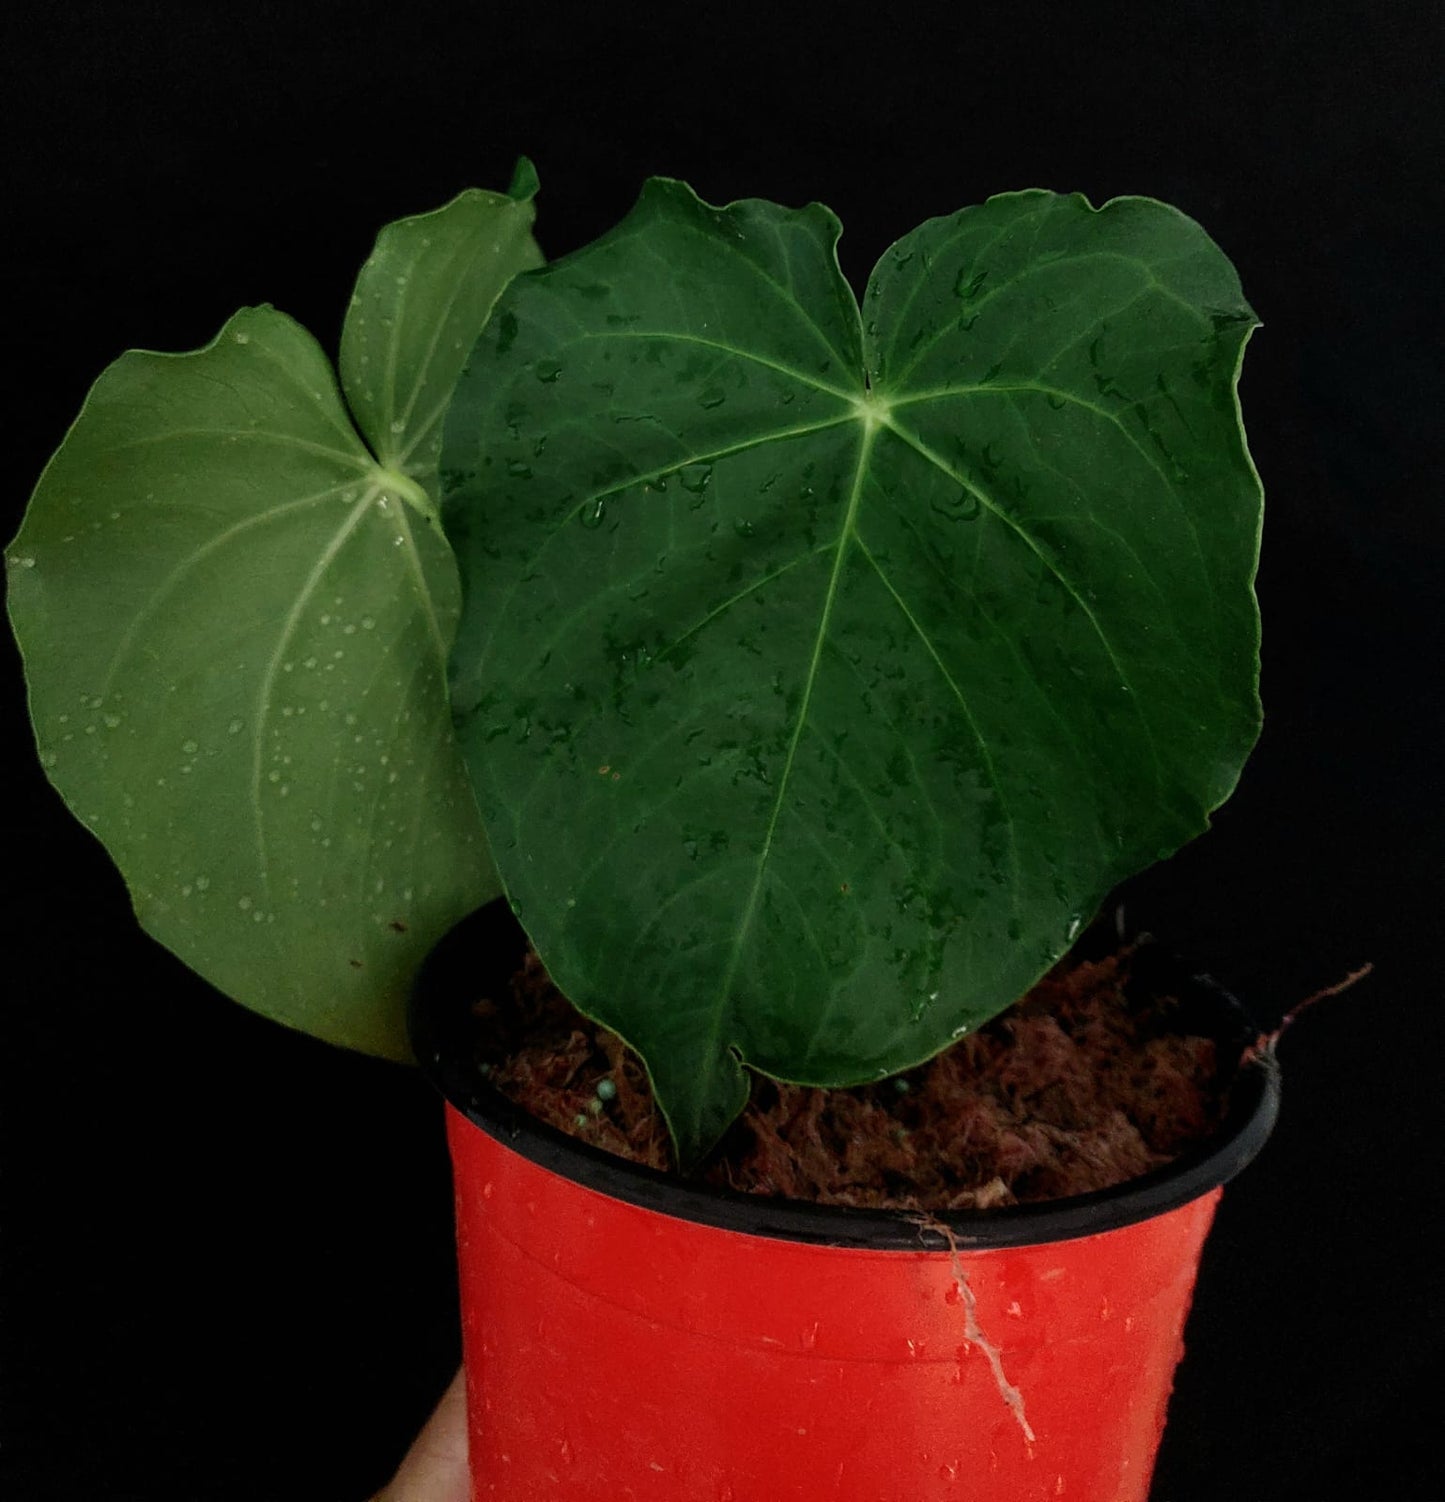 Anthurium sp. "Cumbaza" (EXACT PLANT: Shown in Last Image of Gallery)